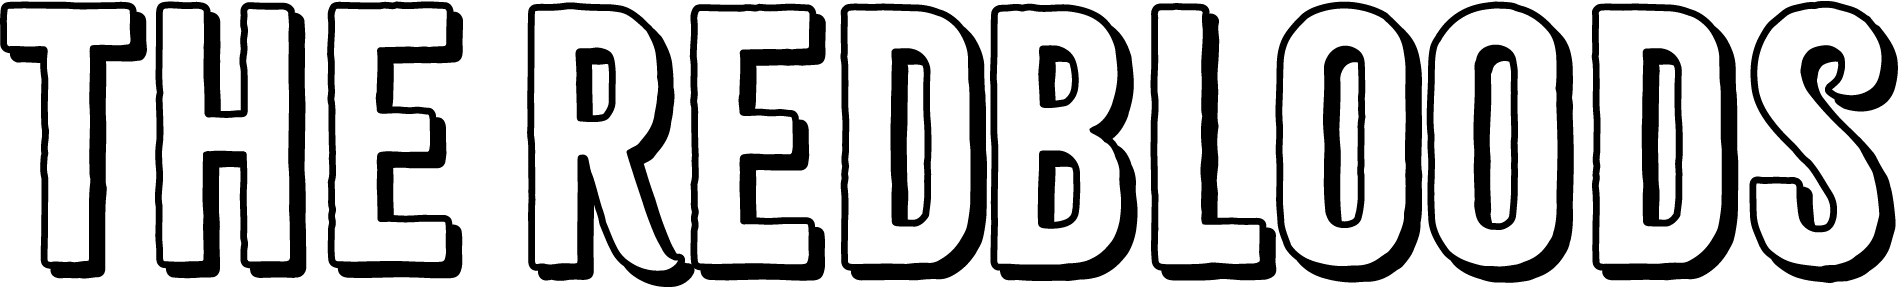 The Redbloods logo